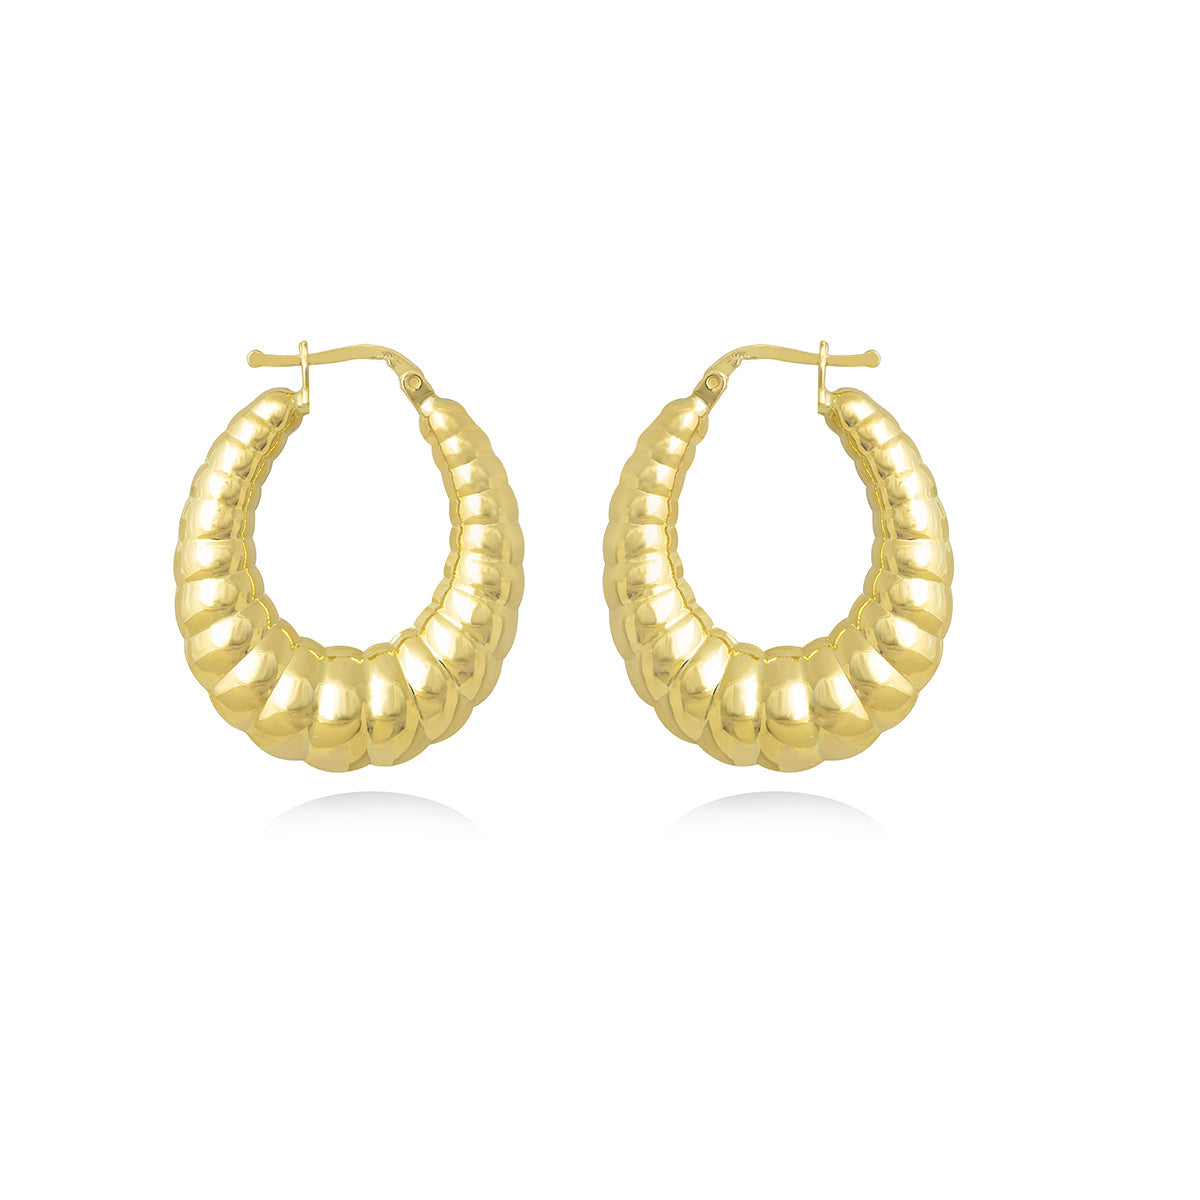 Shrimp Hollow Classic Hoop Earrings in 18k Yellow Gold